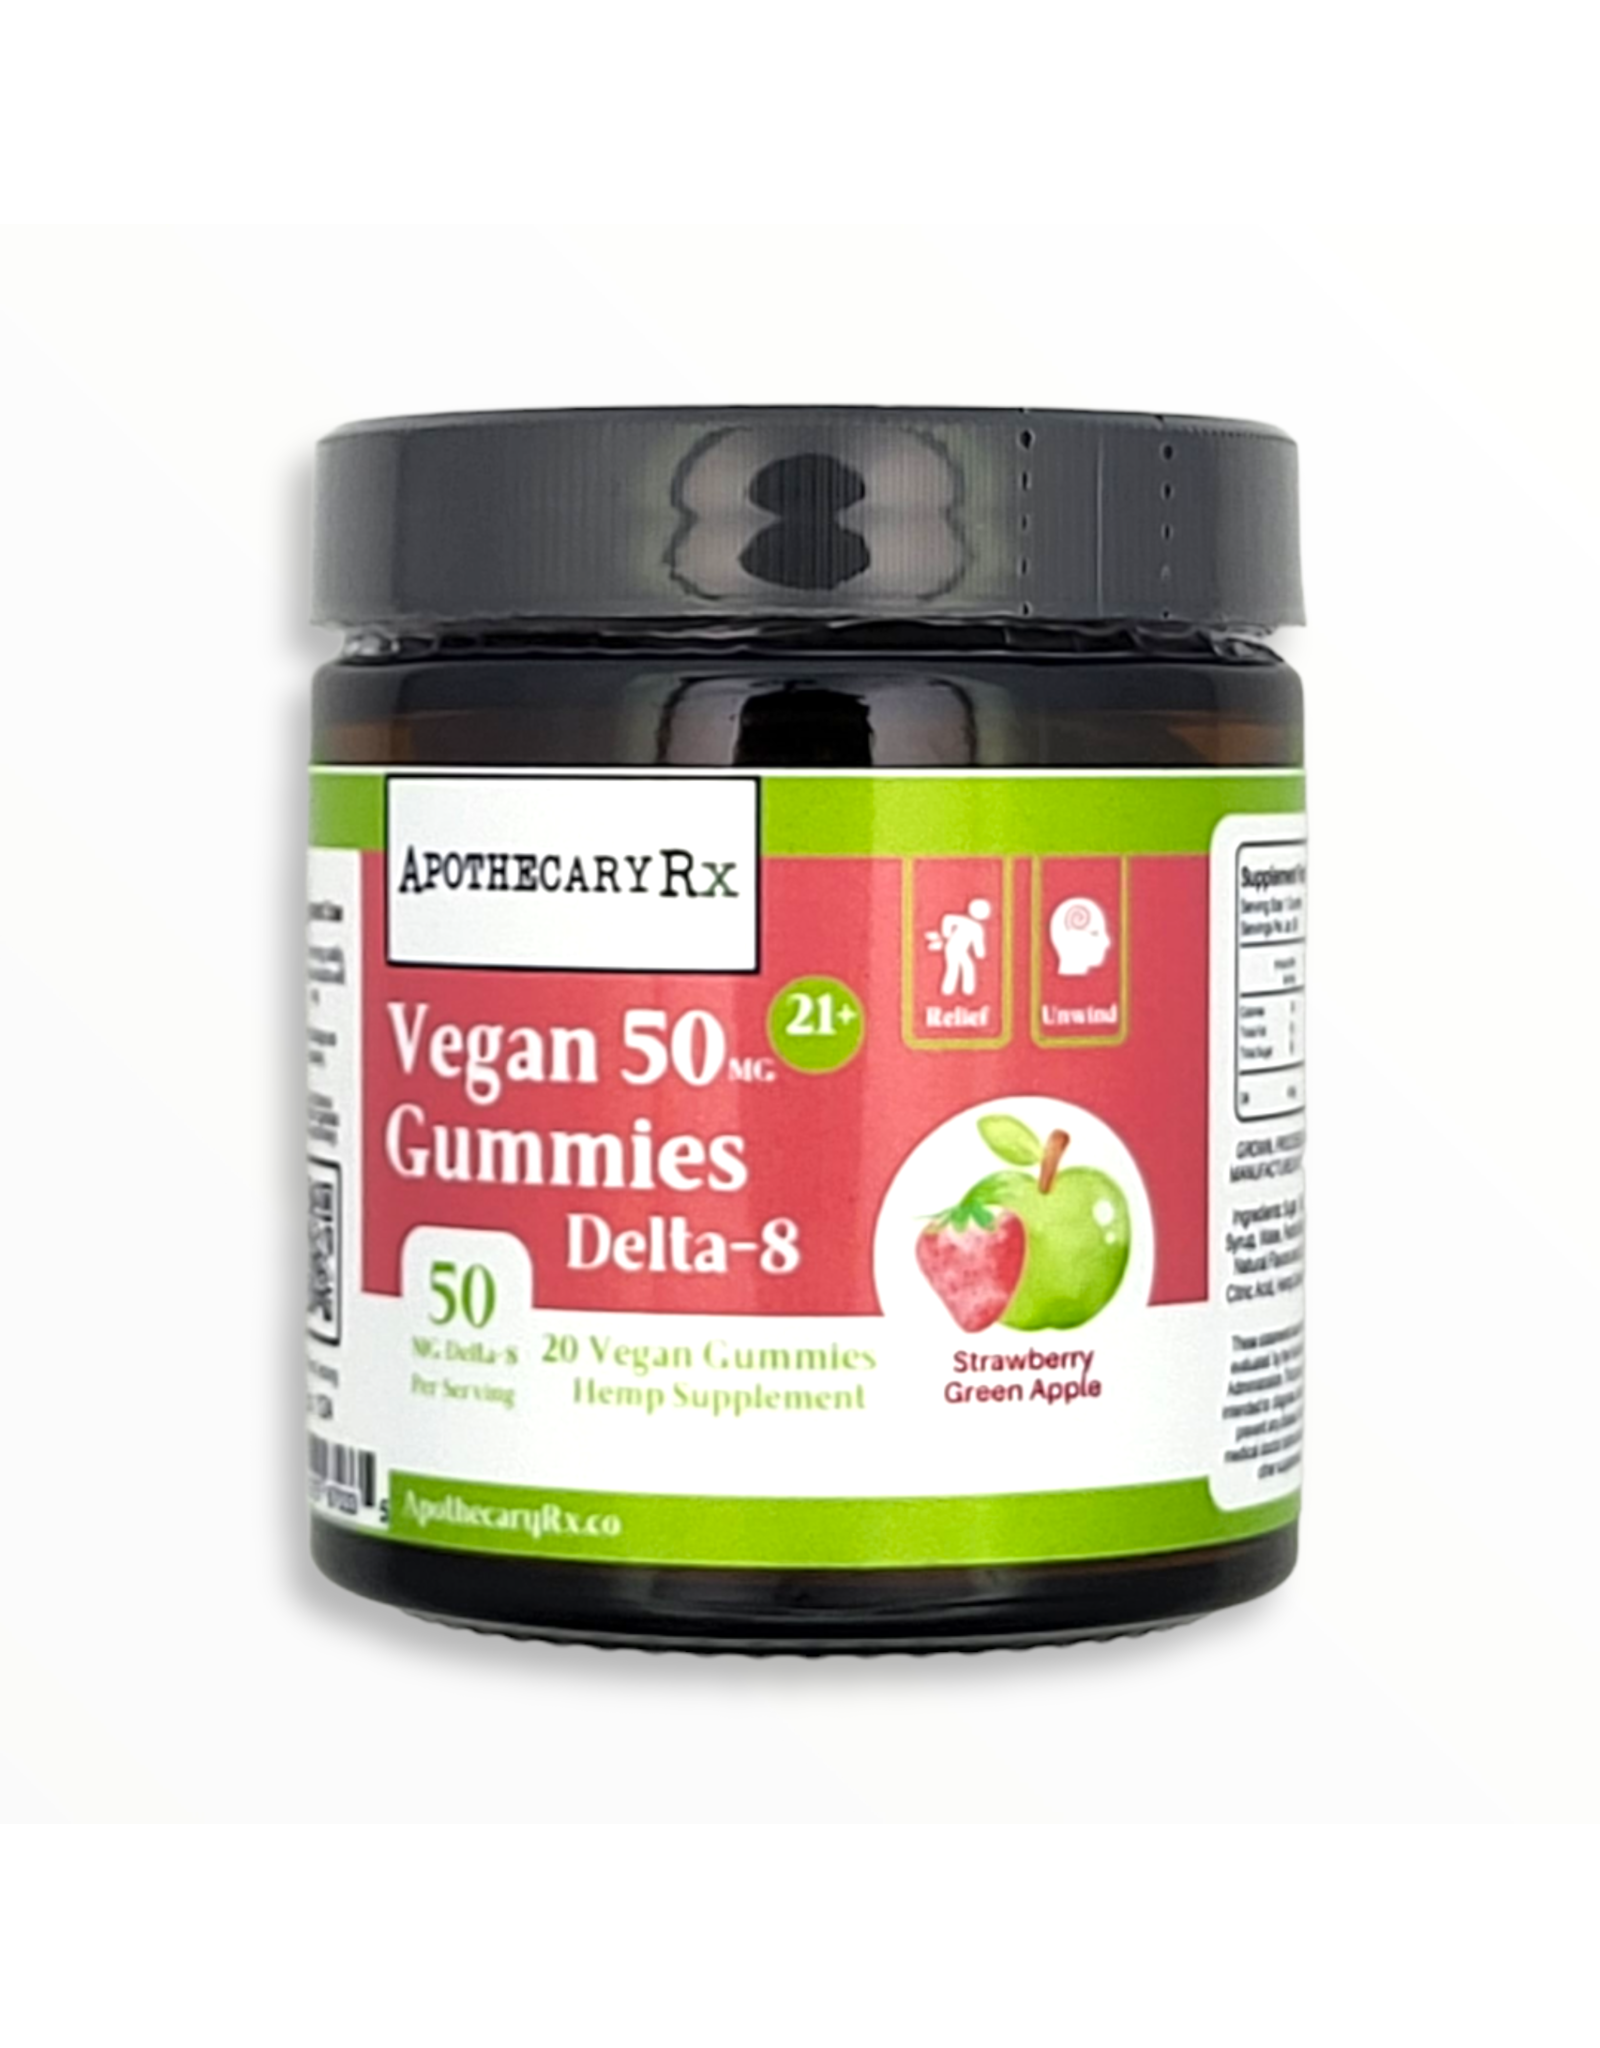 Apothecary Rx Apothecary Rx Delta 8 Vegan Non GMO Strawberry Green Apple Gummies 50mg 20ct